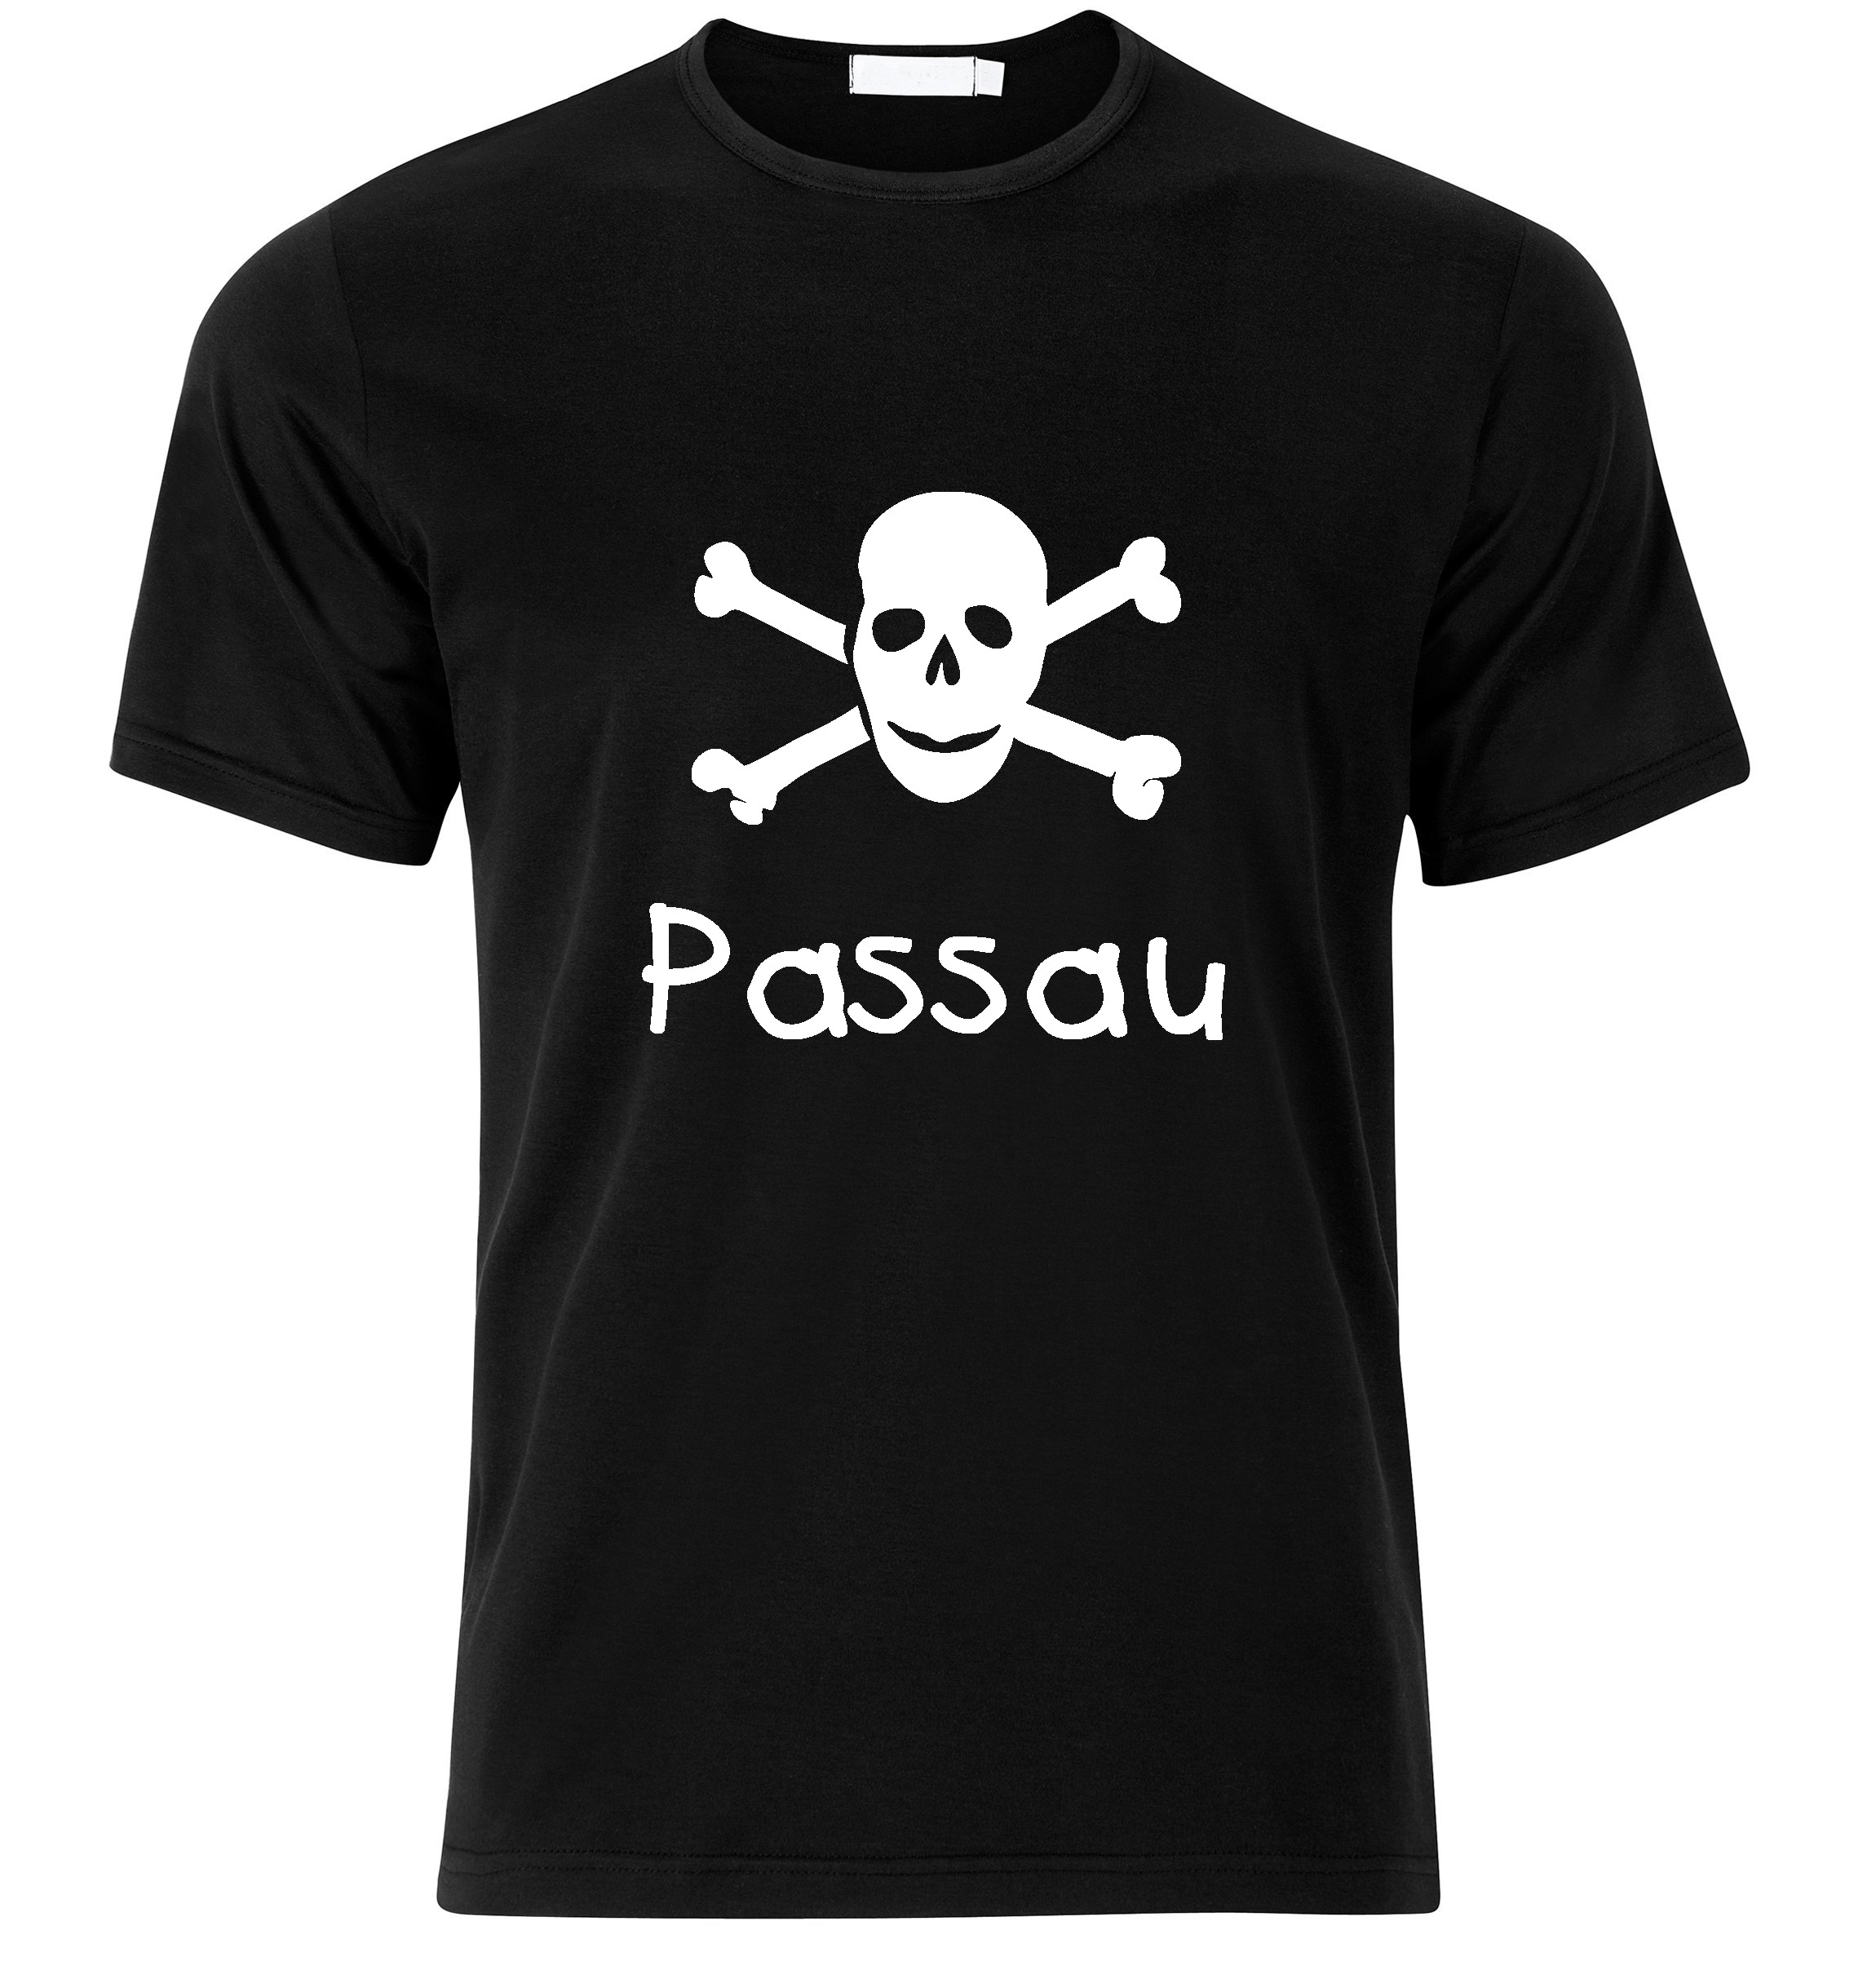 T-Shirt Passau Jolly Roger, Totenkopf